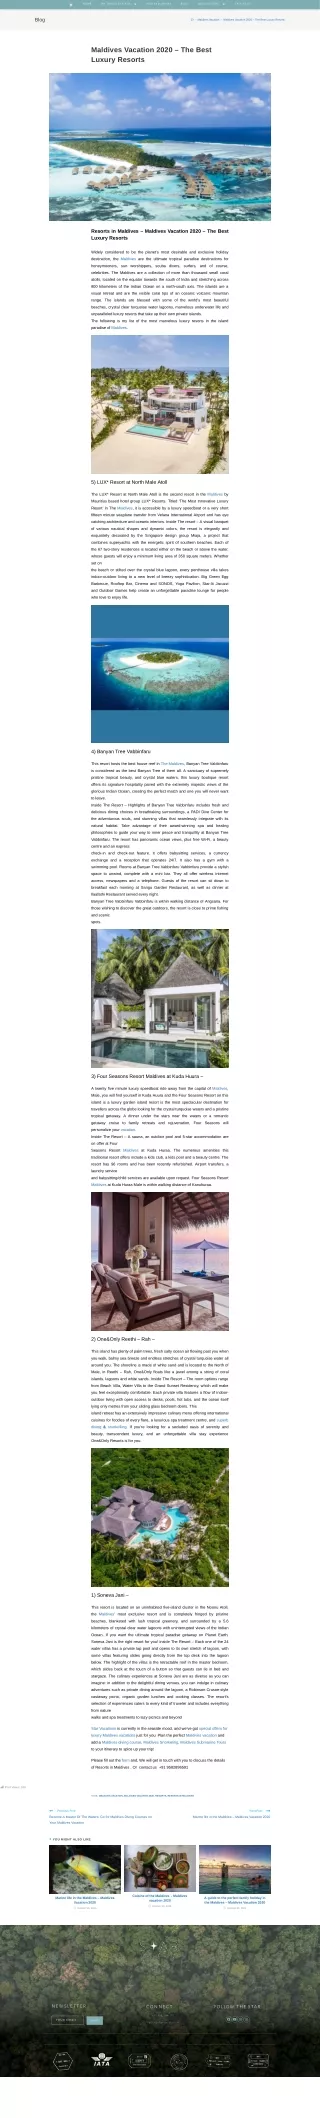 Maldives Vacation 2020 – The Best Luxury Resorts